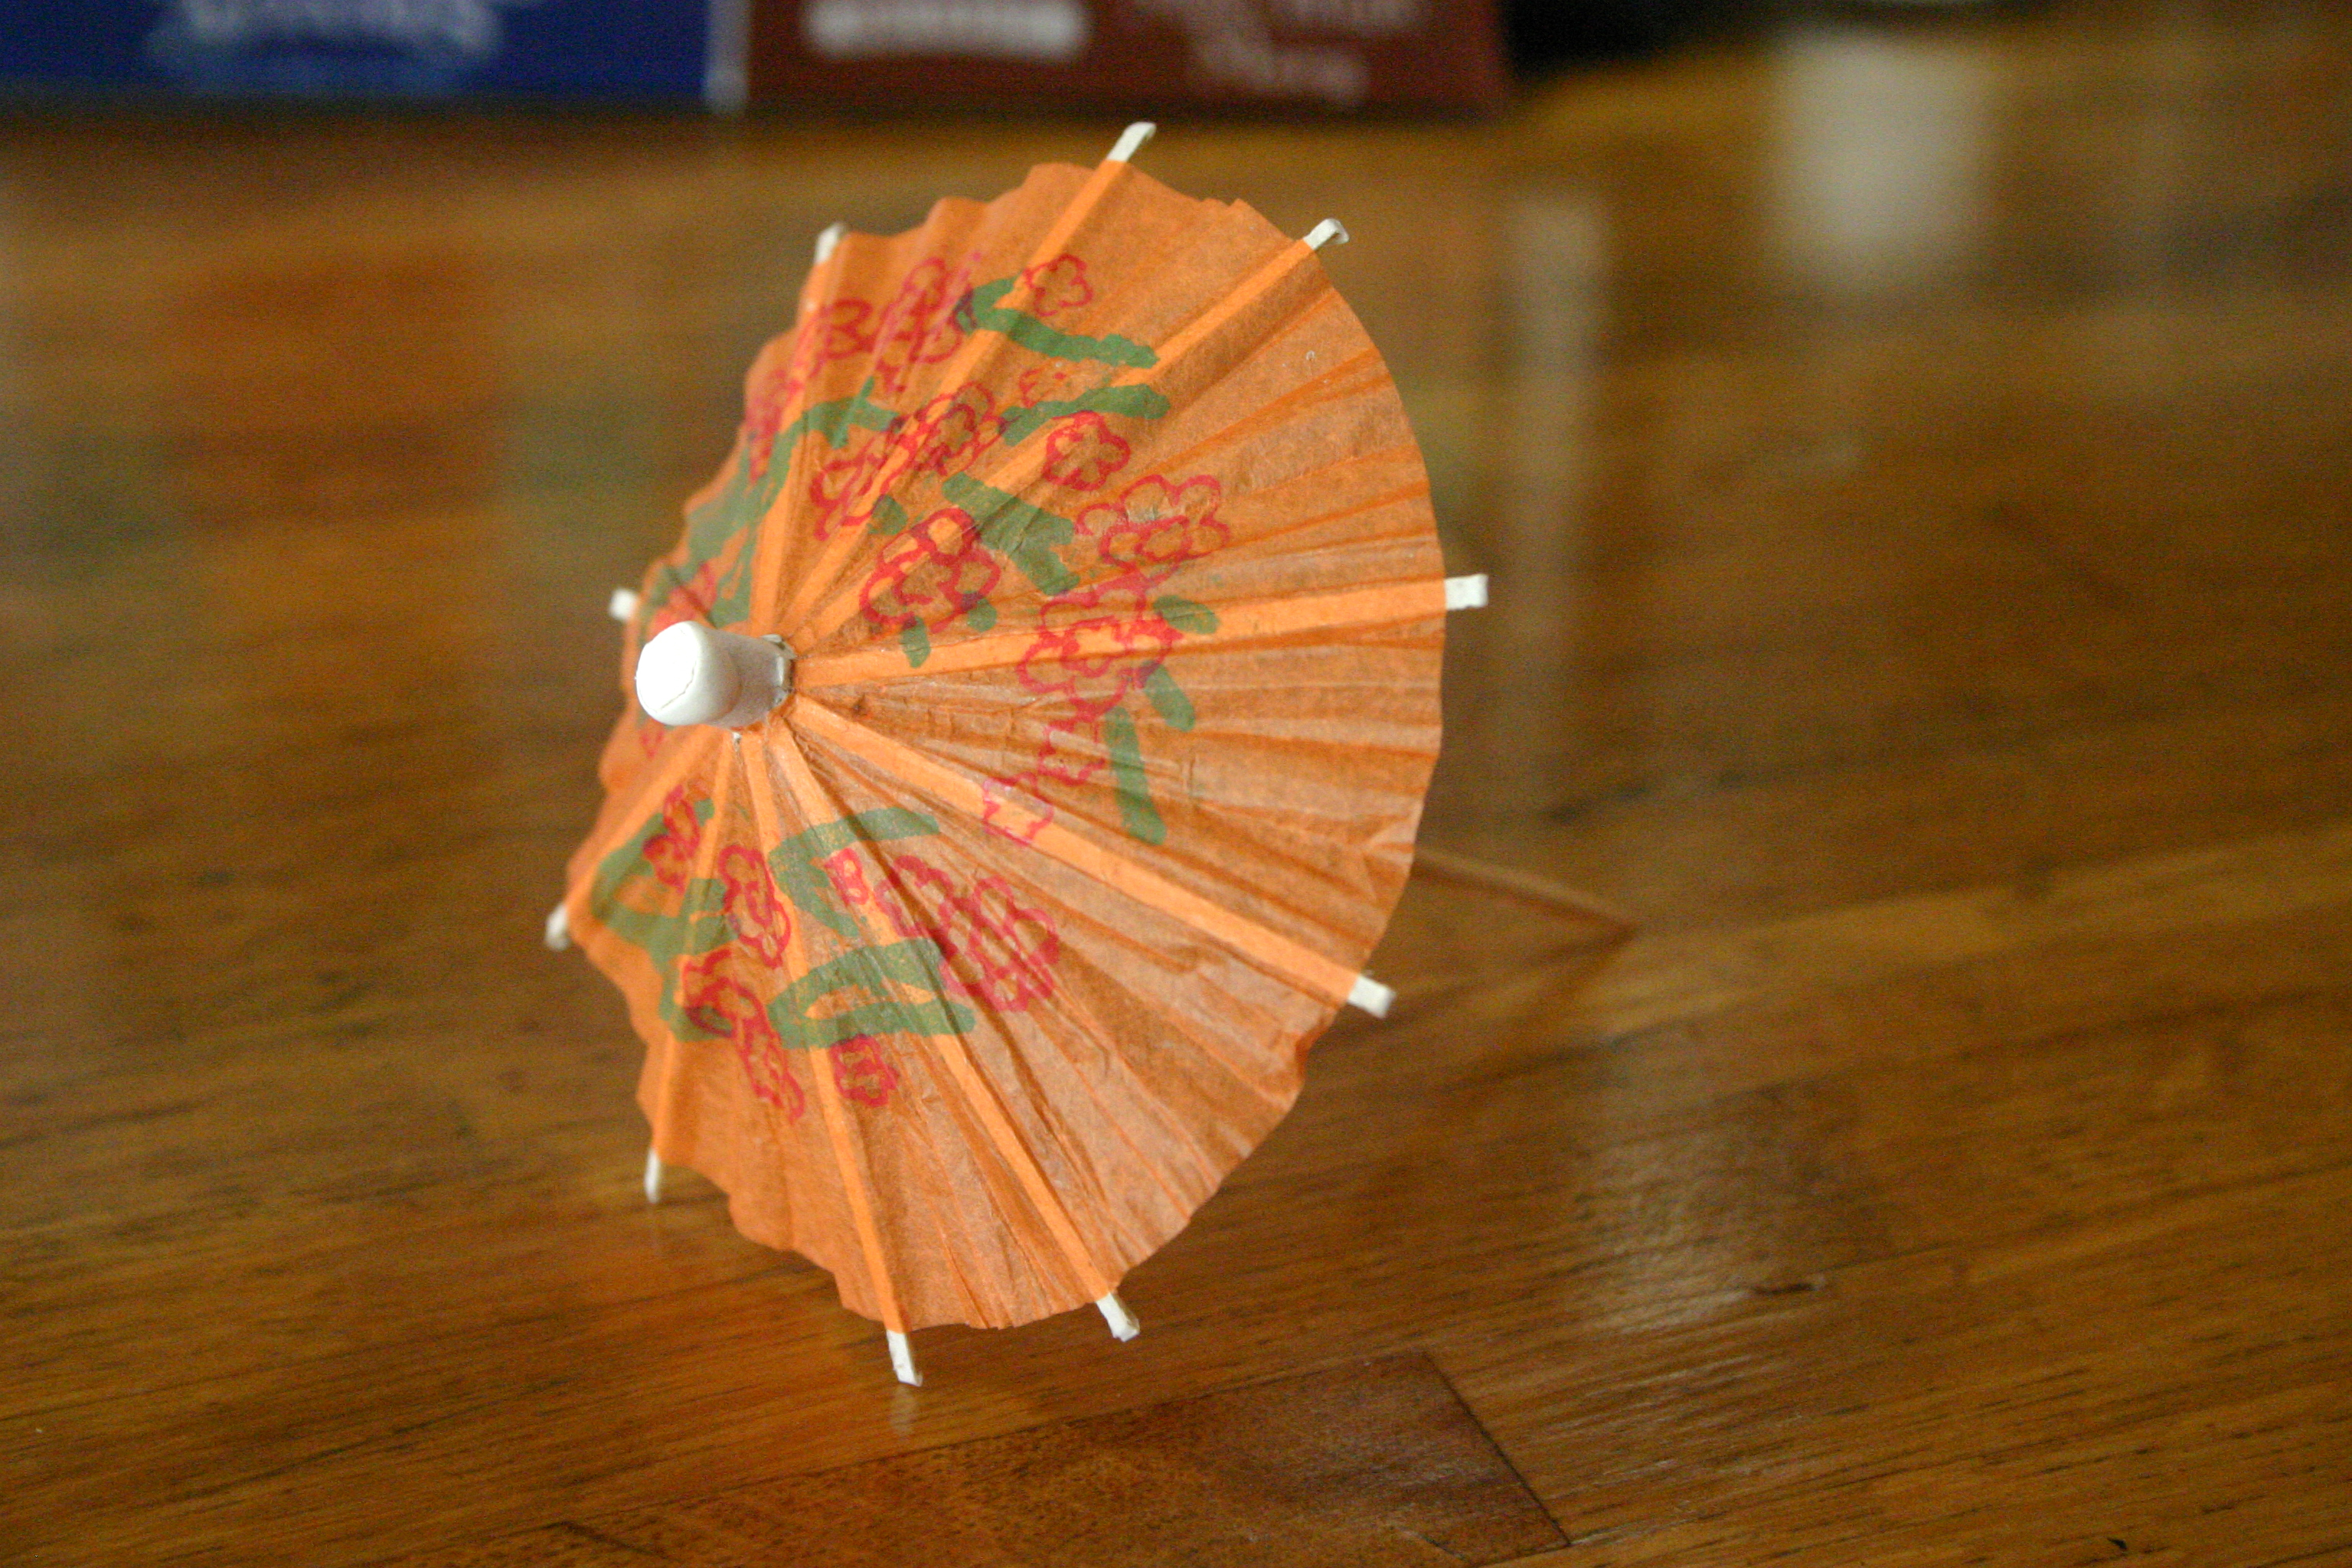 File:Cocktail Umbrella.jpg - Wikimedia Commons